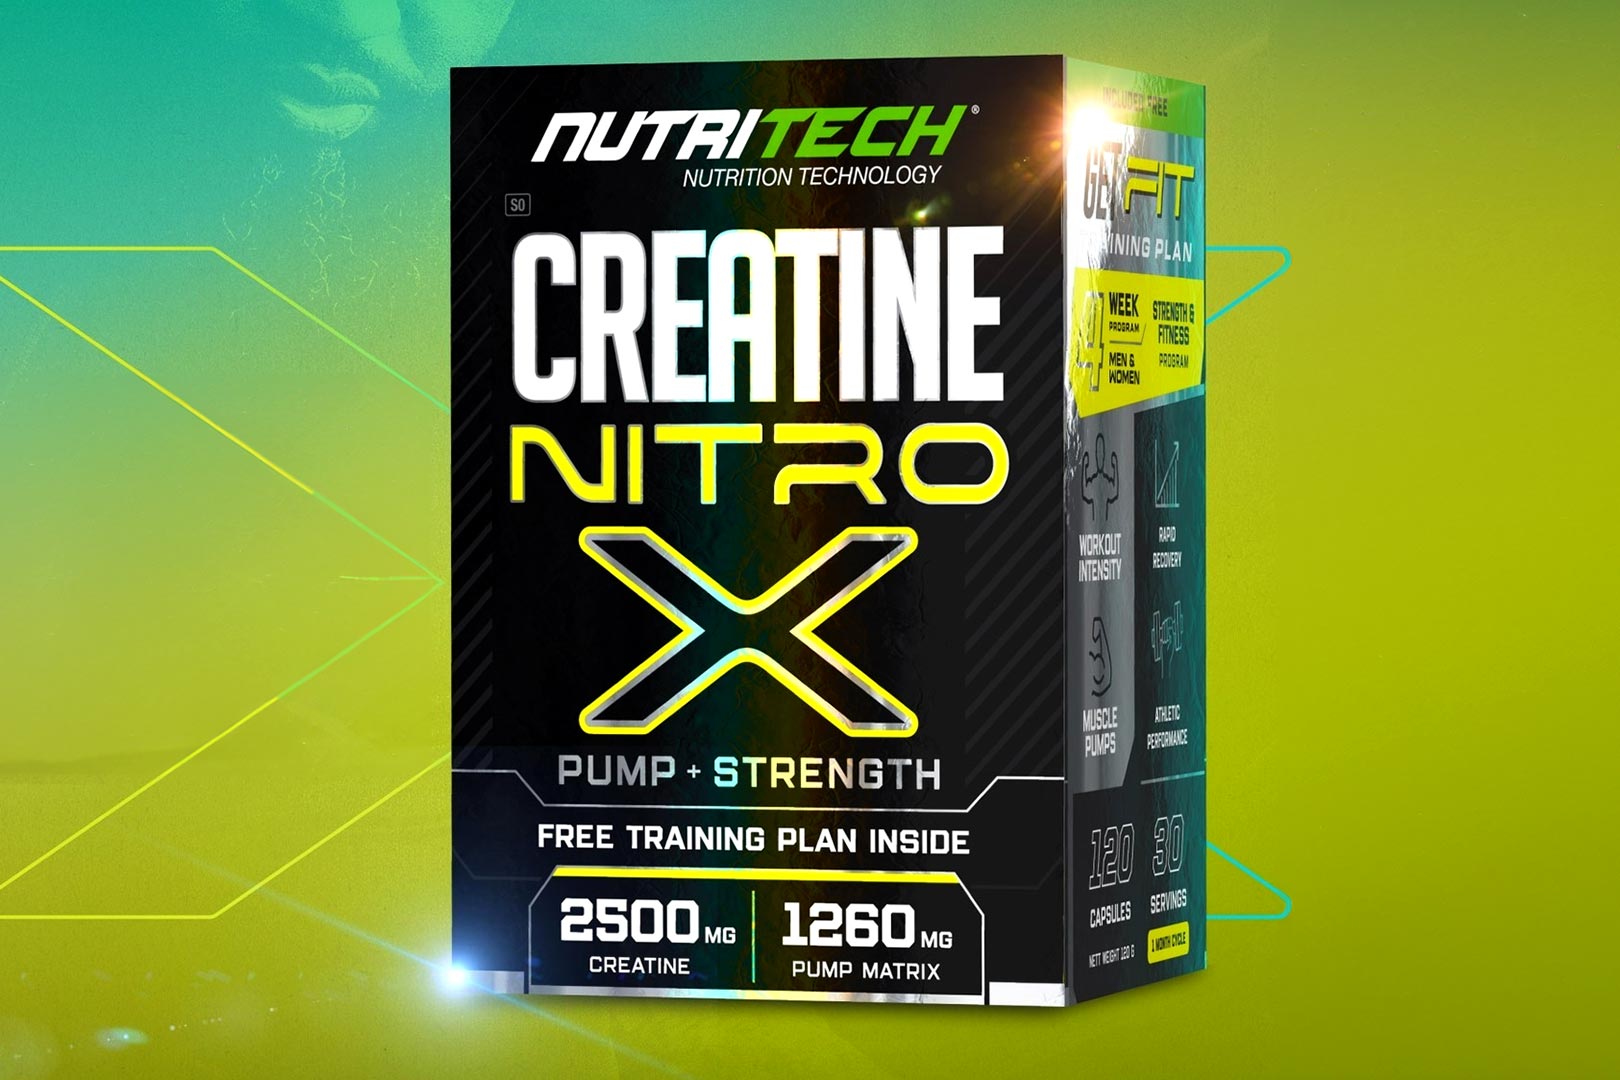 Nutritech Creatine Nitro X